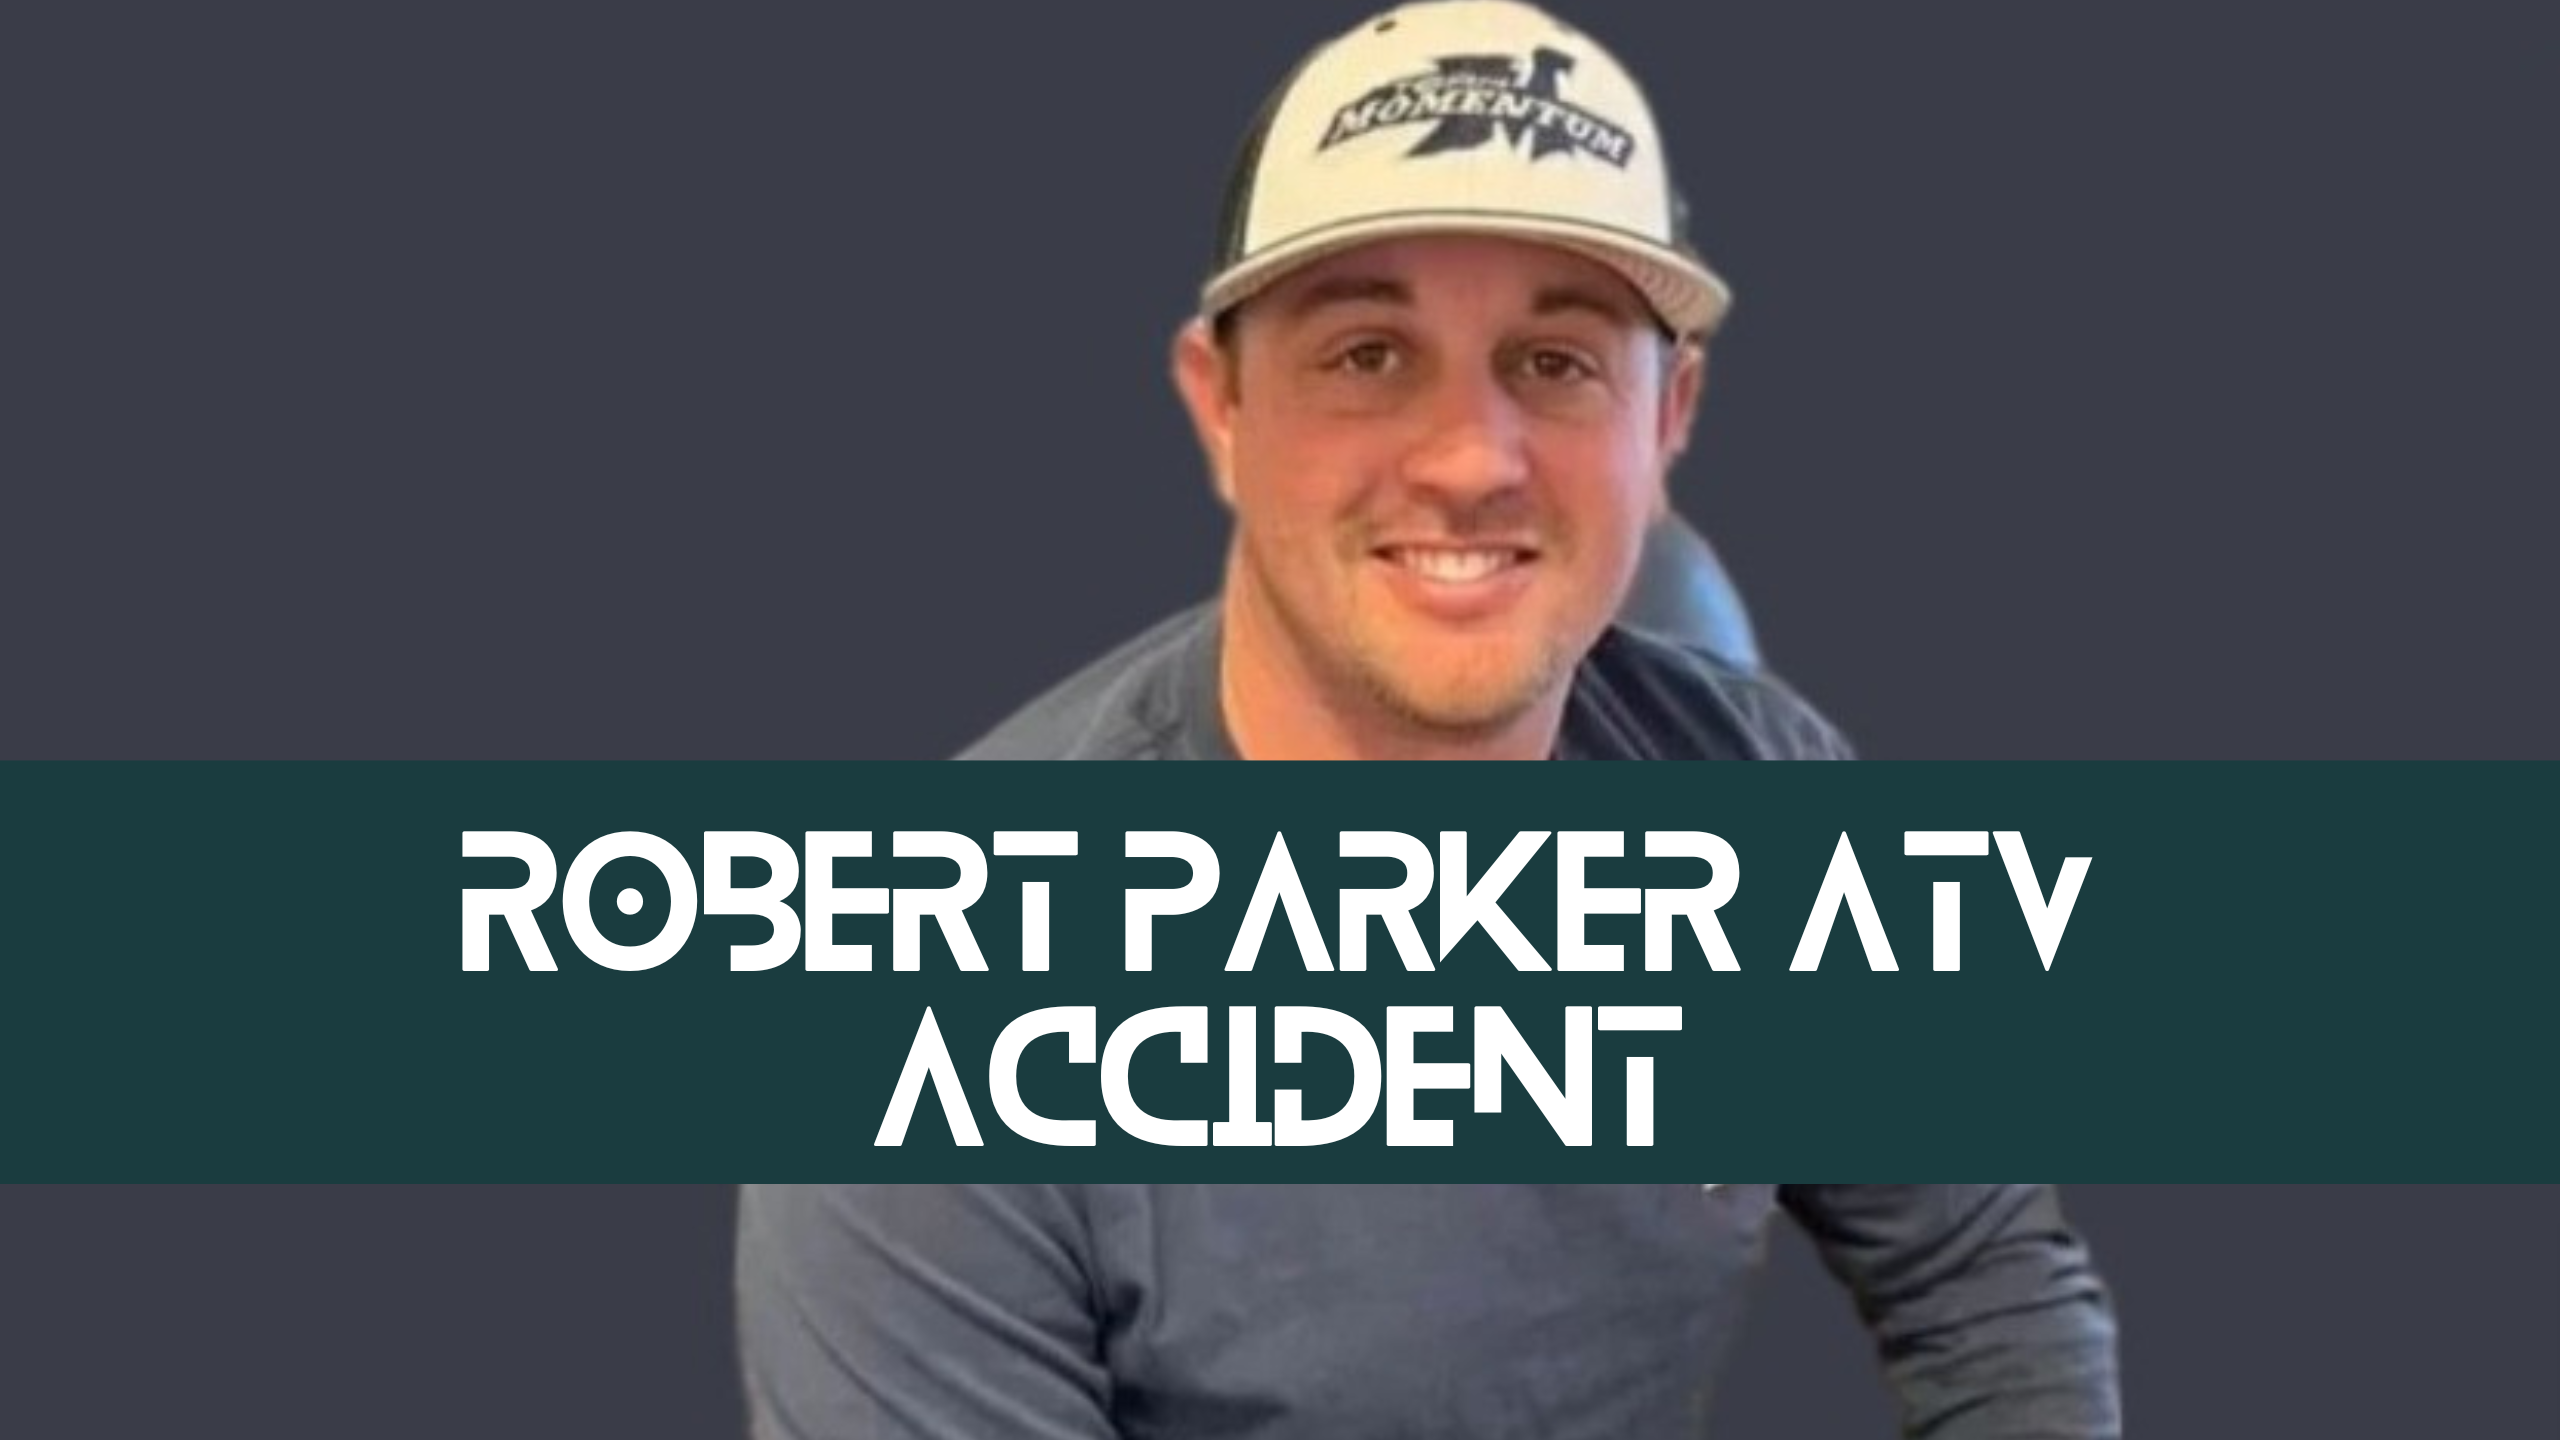 Robert Parker ATV Accident